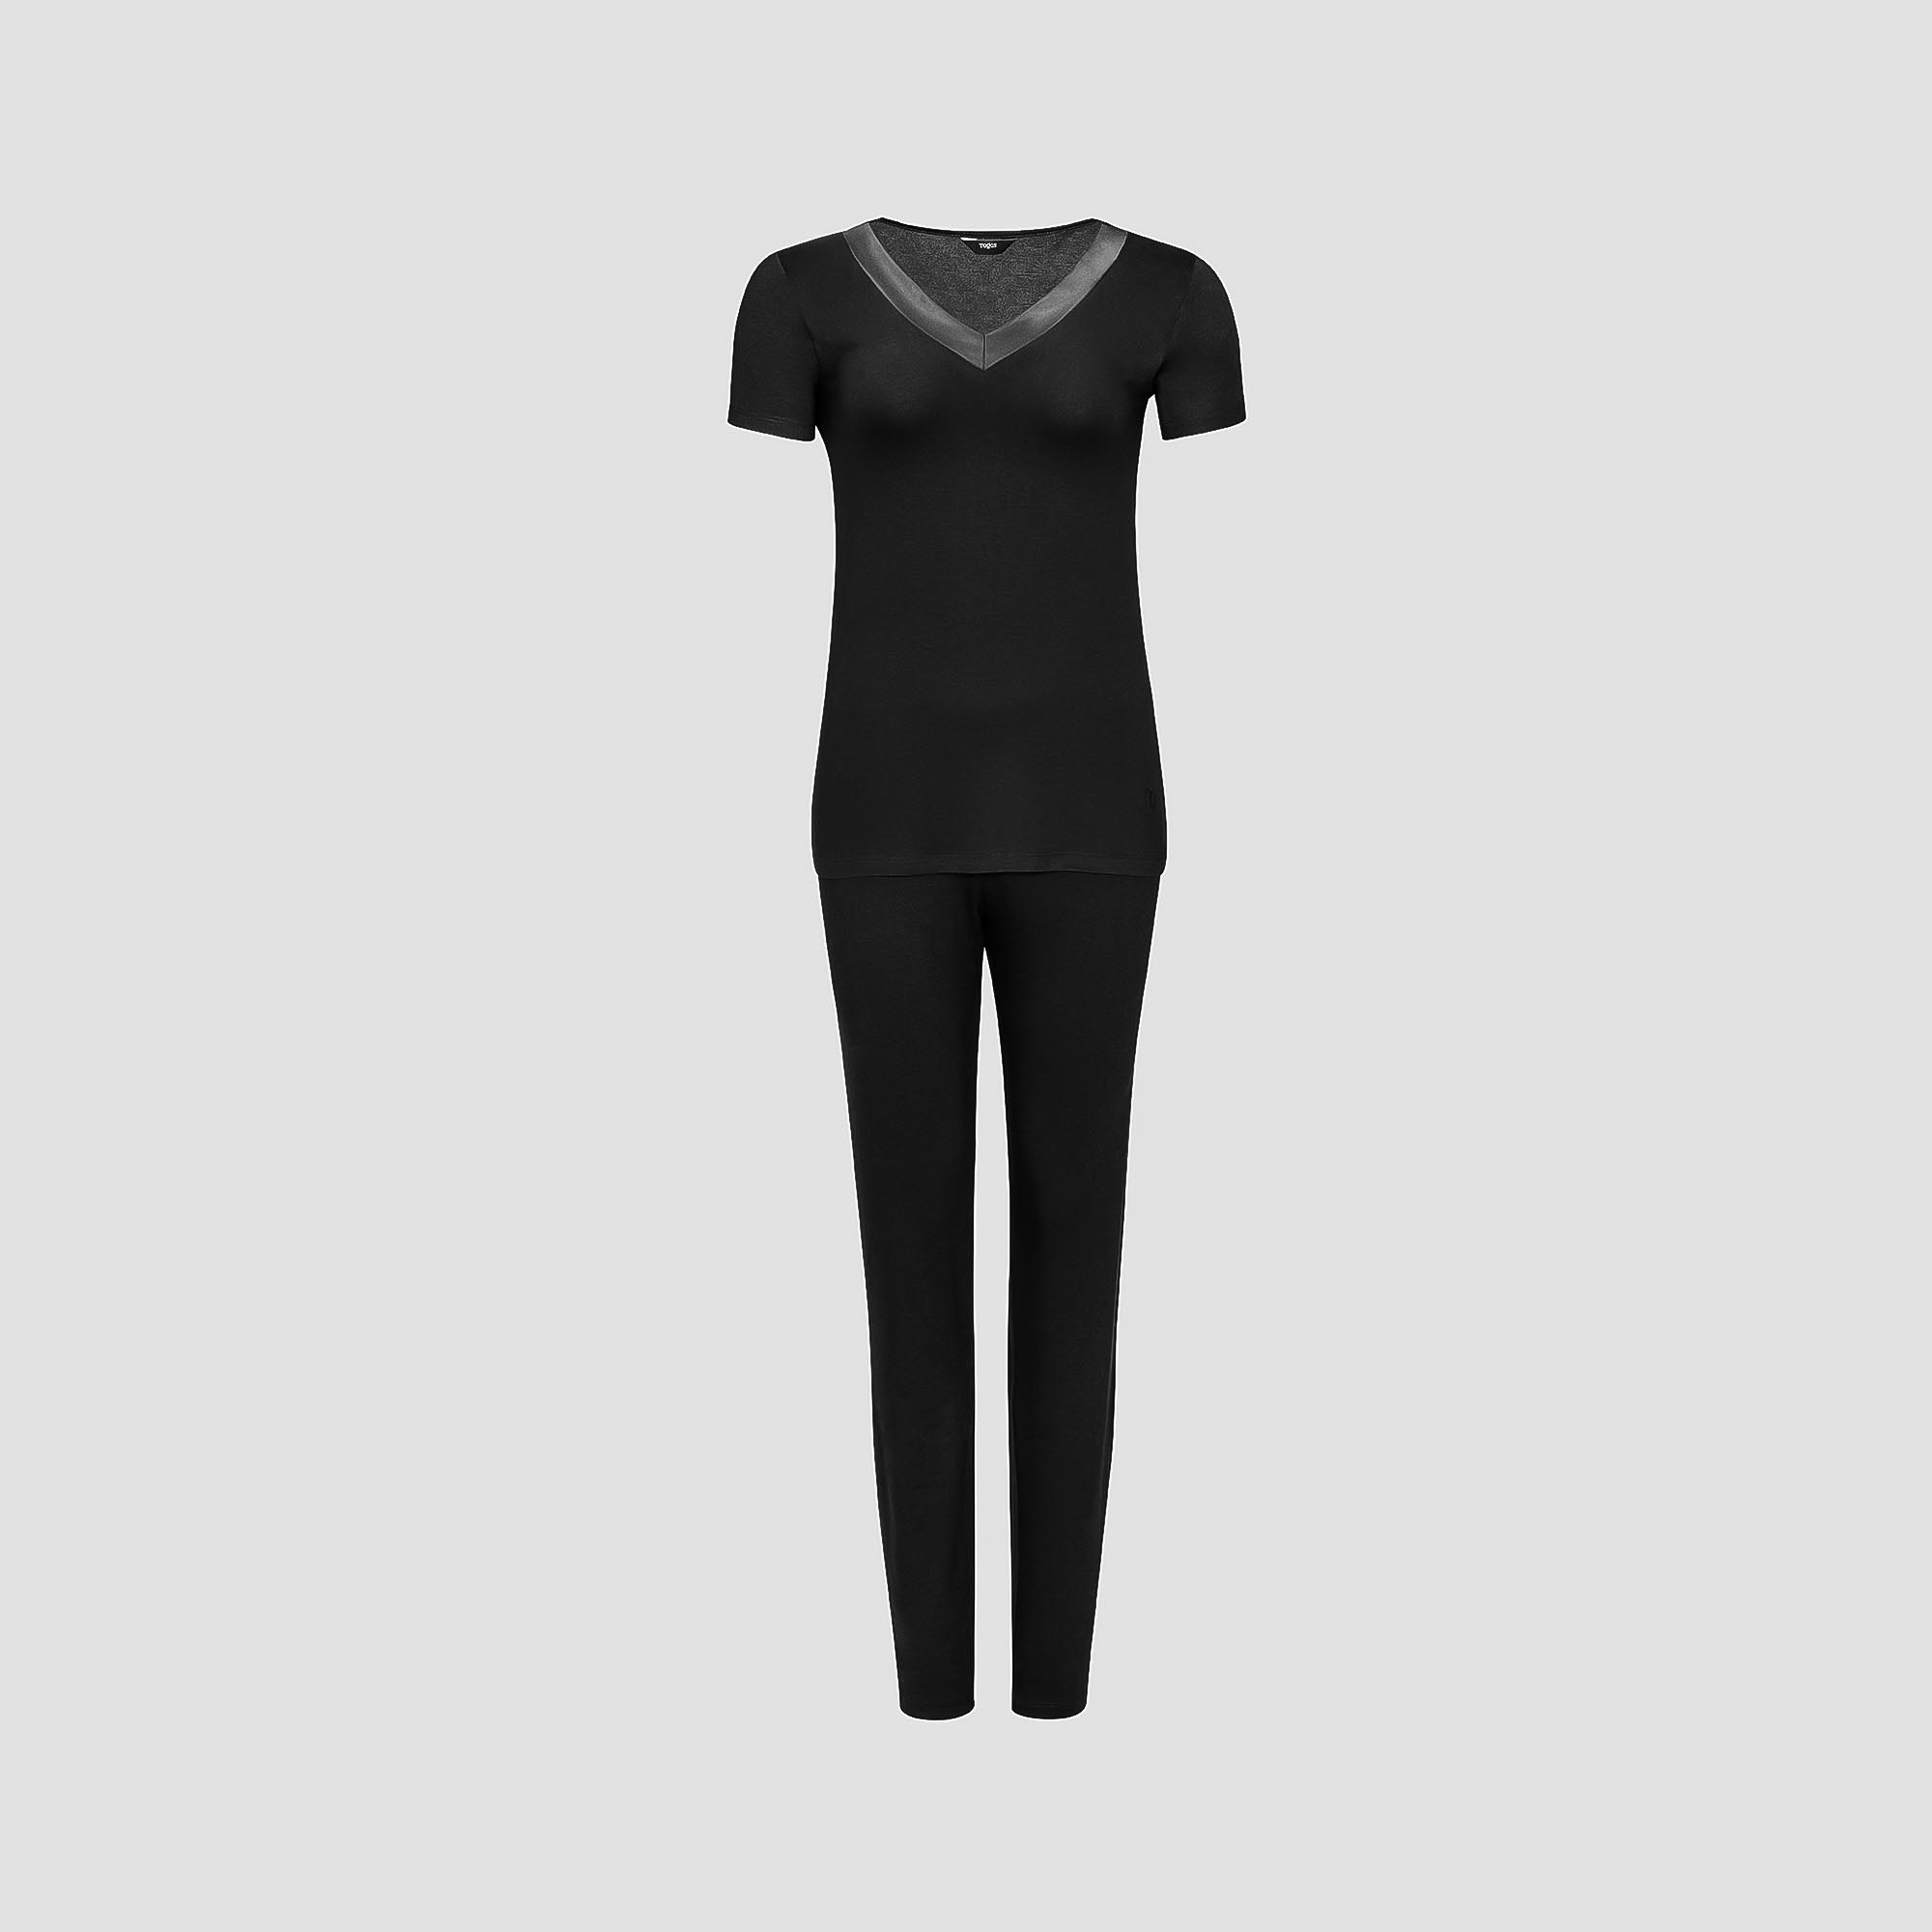 Пижама Togas Ингелла черная женская M(46) 2 предмета пижама футболка брюки